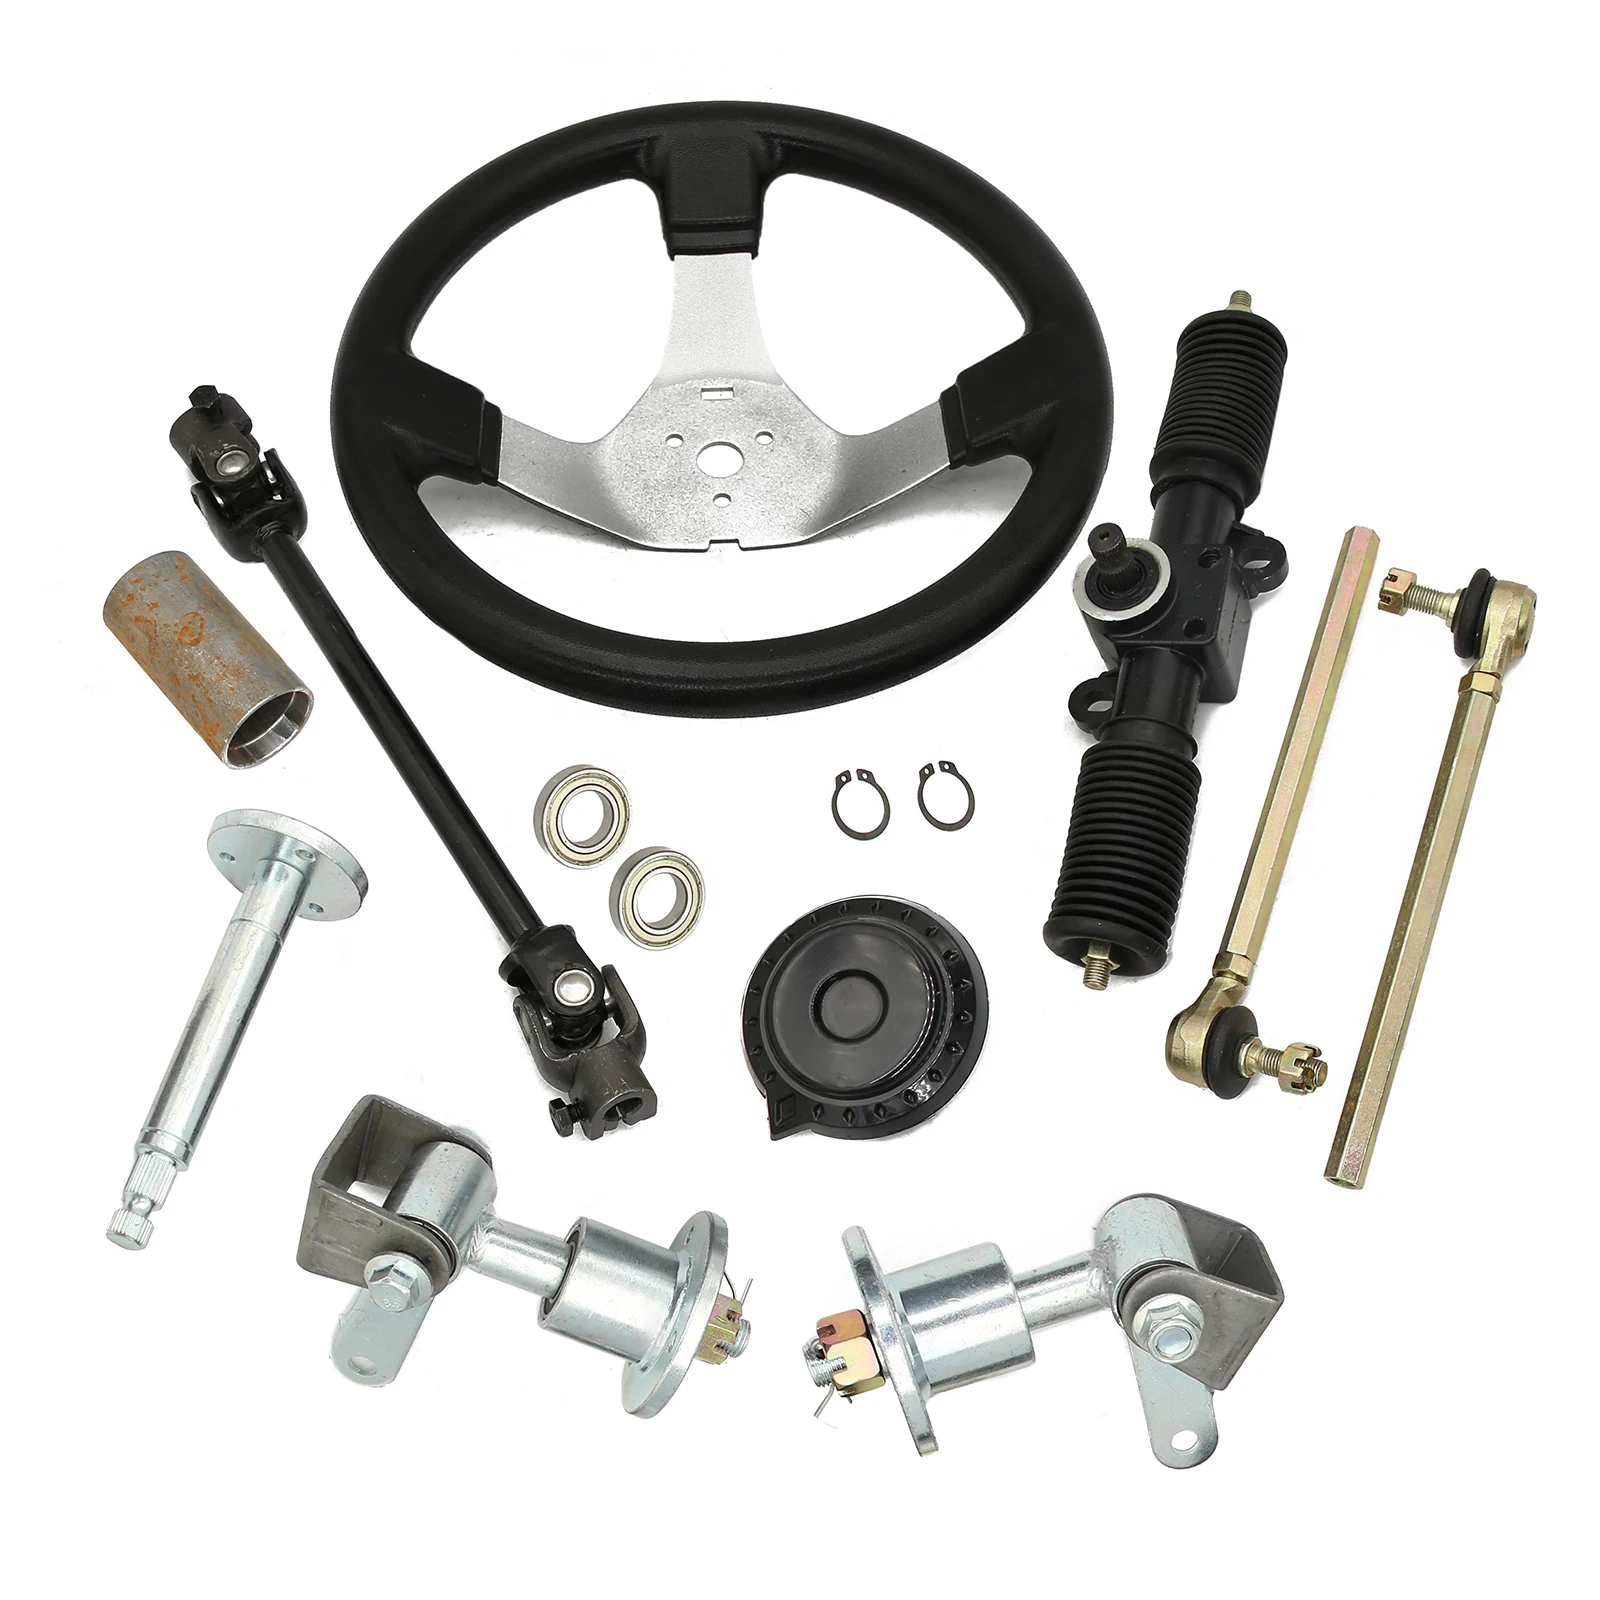 GO KART KARTING For 125cc 150cc 200cc 250cc 420mm 330mm ATV UTV Buggy Wheel Steering Gear Rack Pinion With Steering Wheel